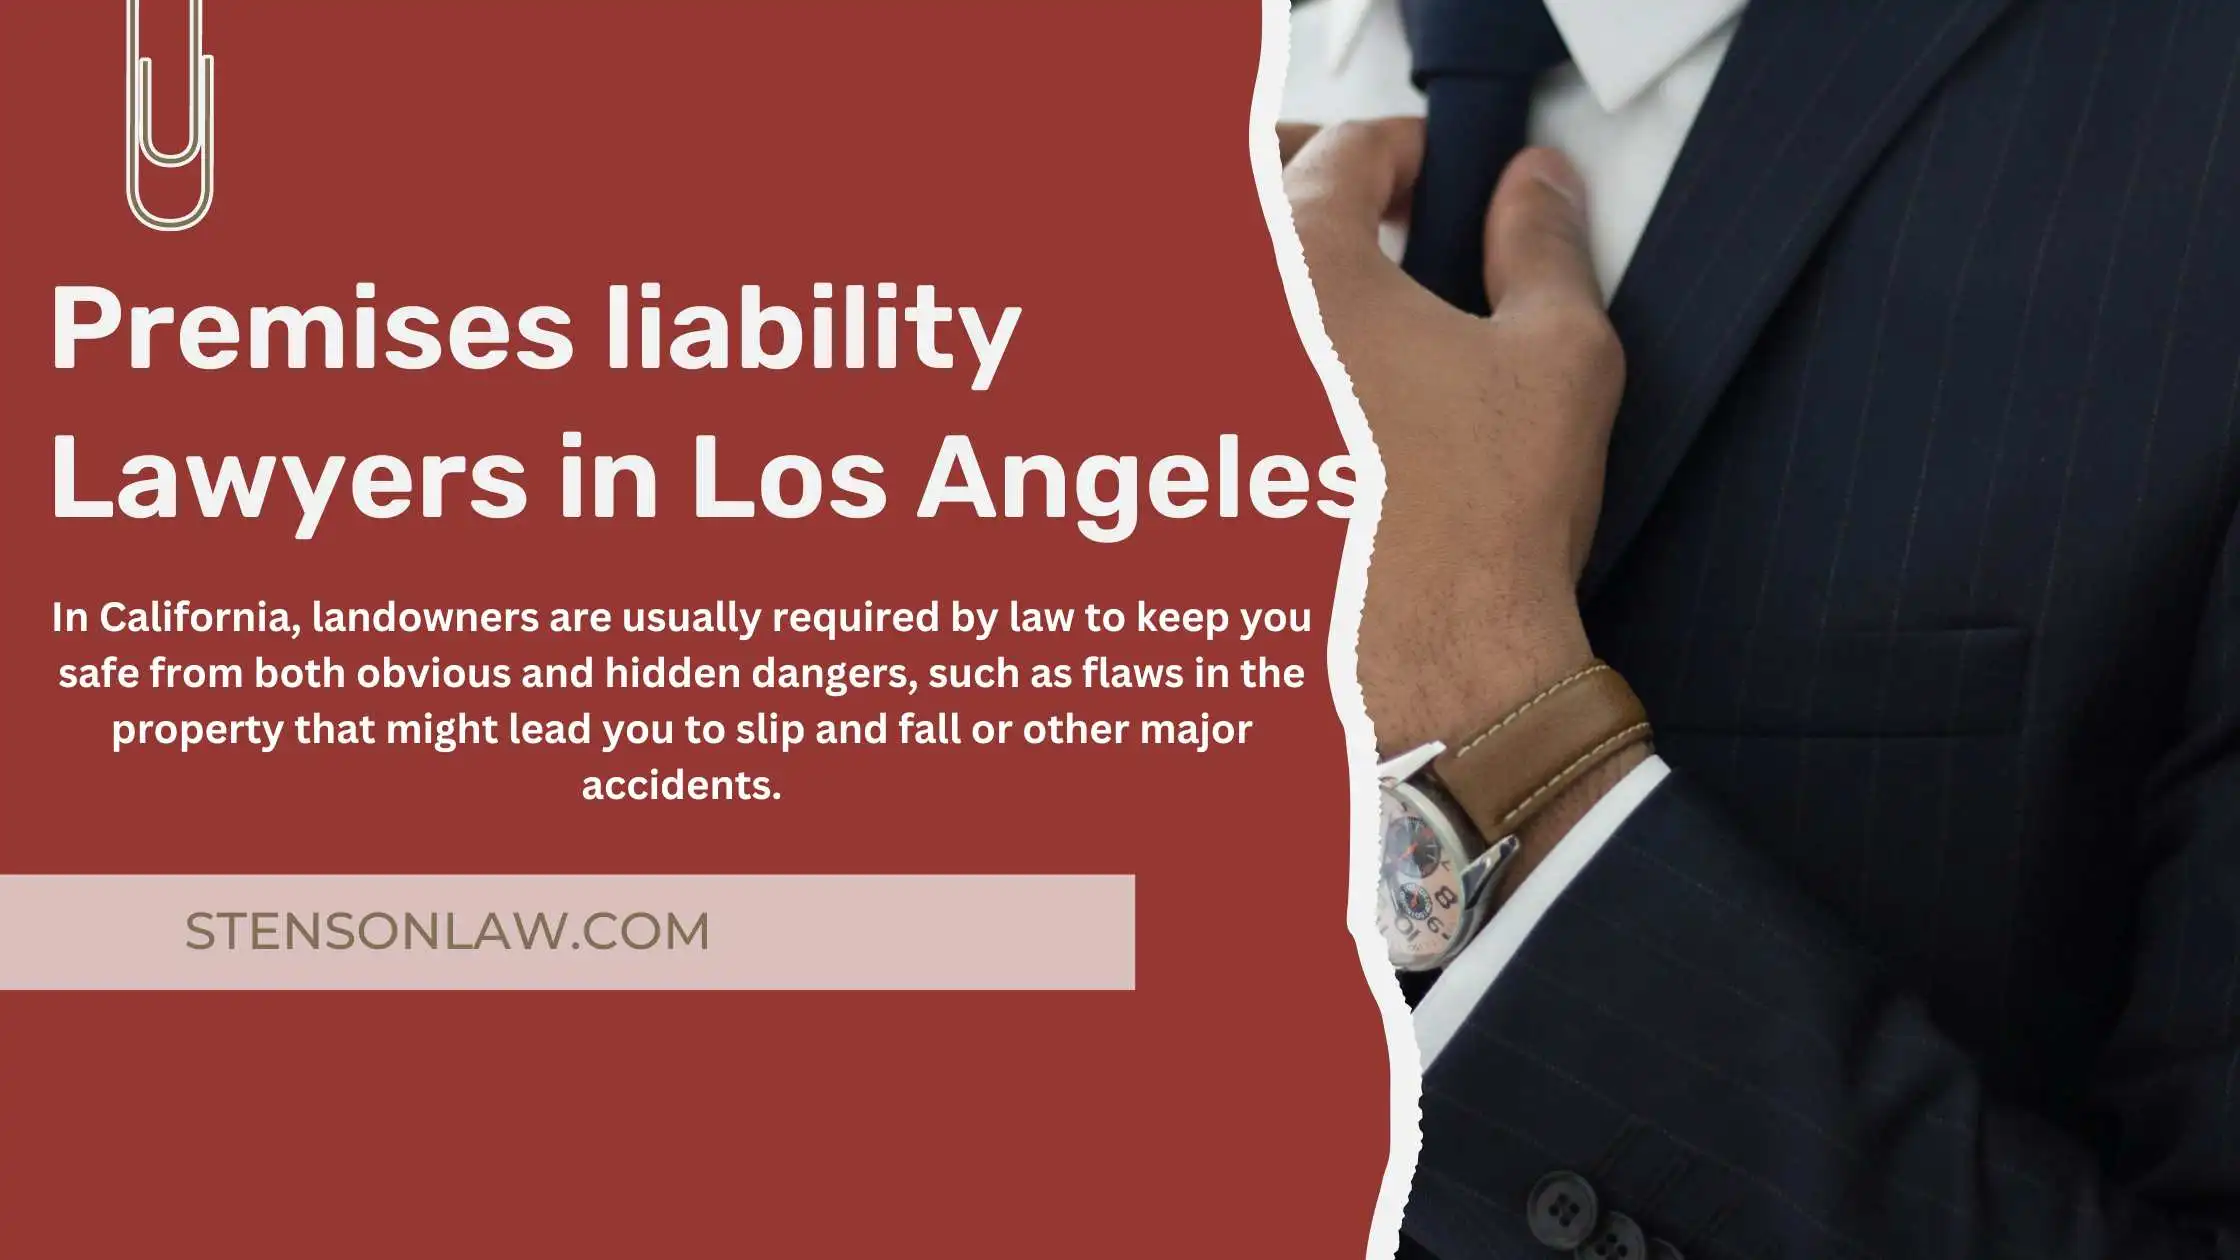 Los Angeles Premises liability Lawyers
